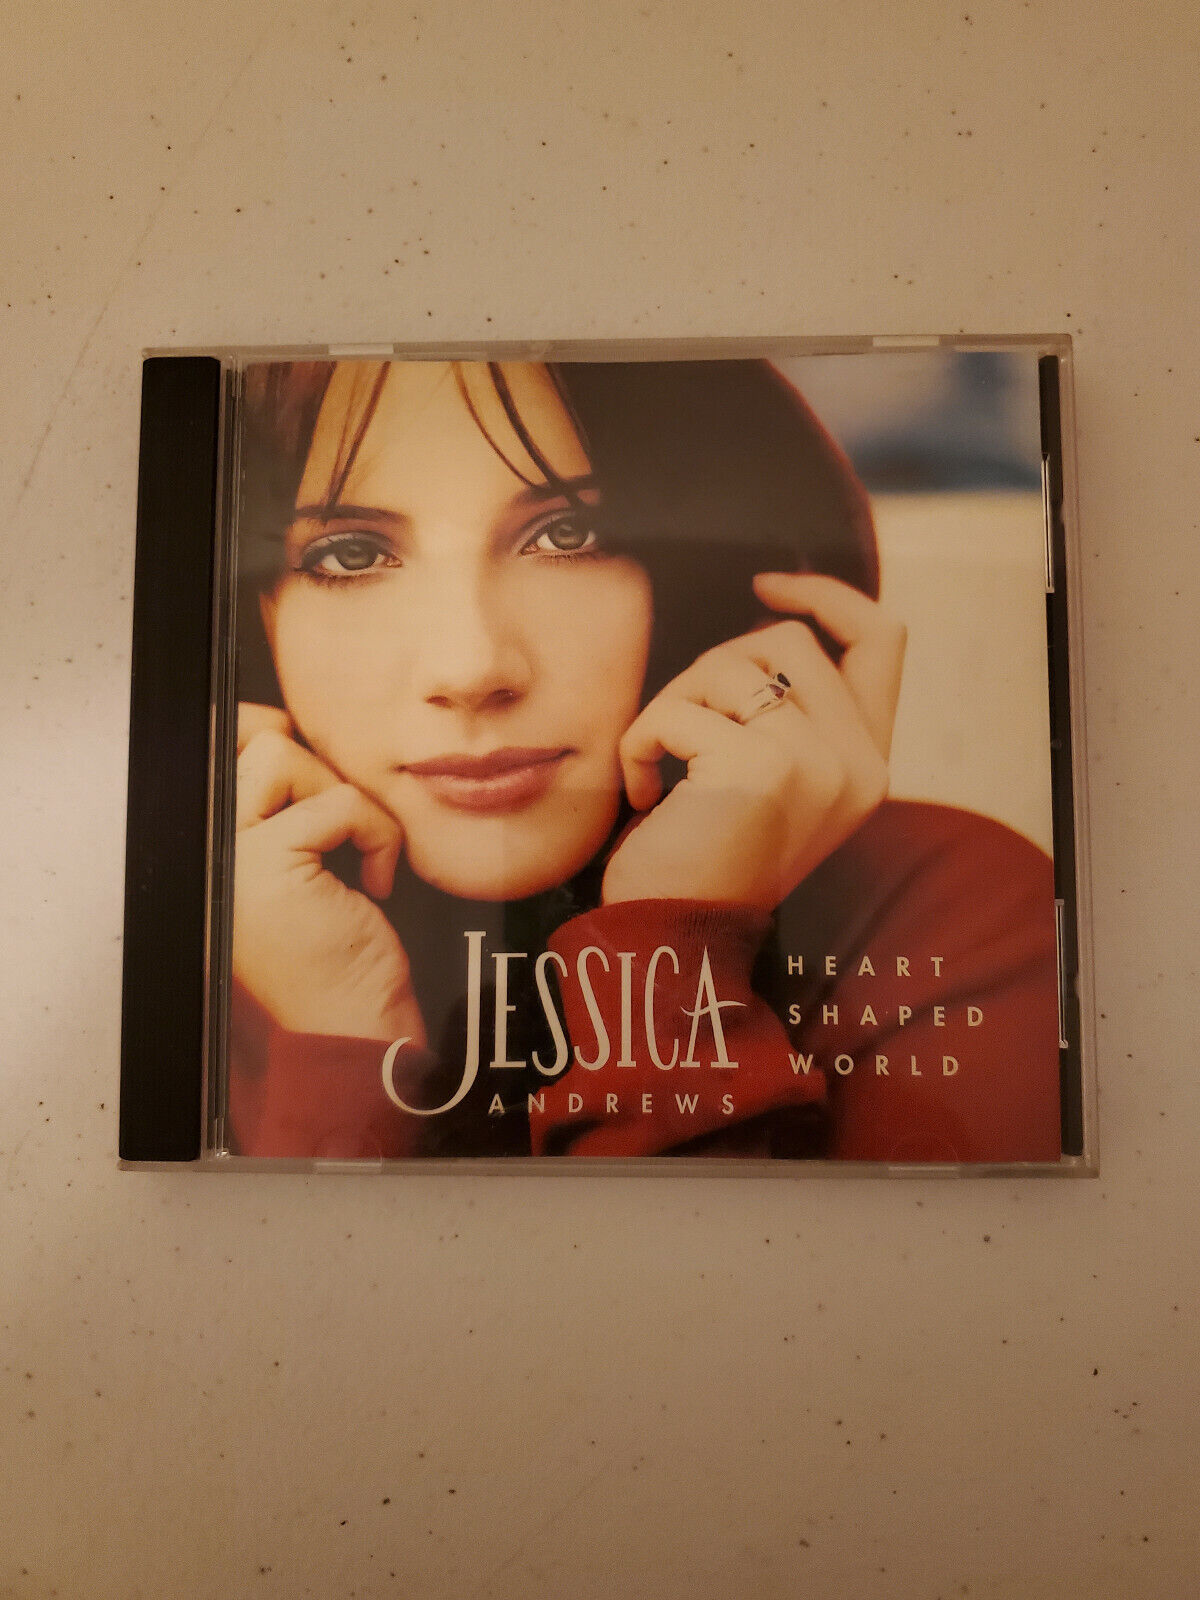 Jessica Andrews - Heart Shaped World CD - 1999